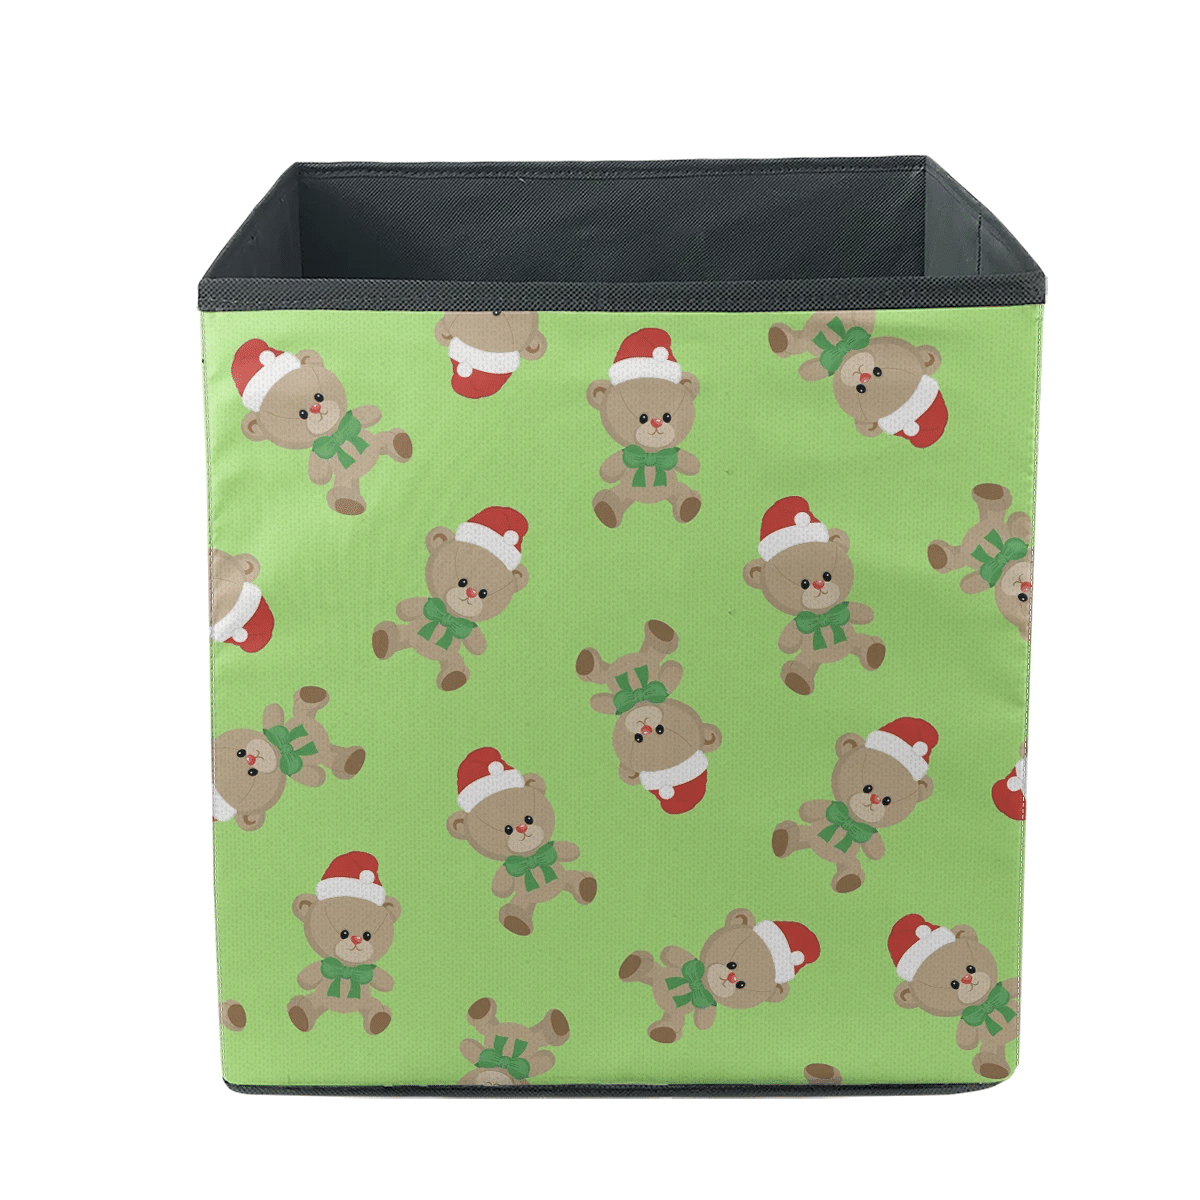 Merry Christmas Teddy Bear In Red Hat On Green Storage Bin Storage Cube